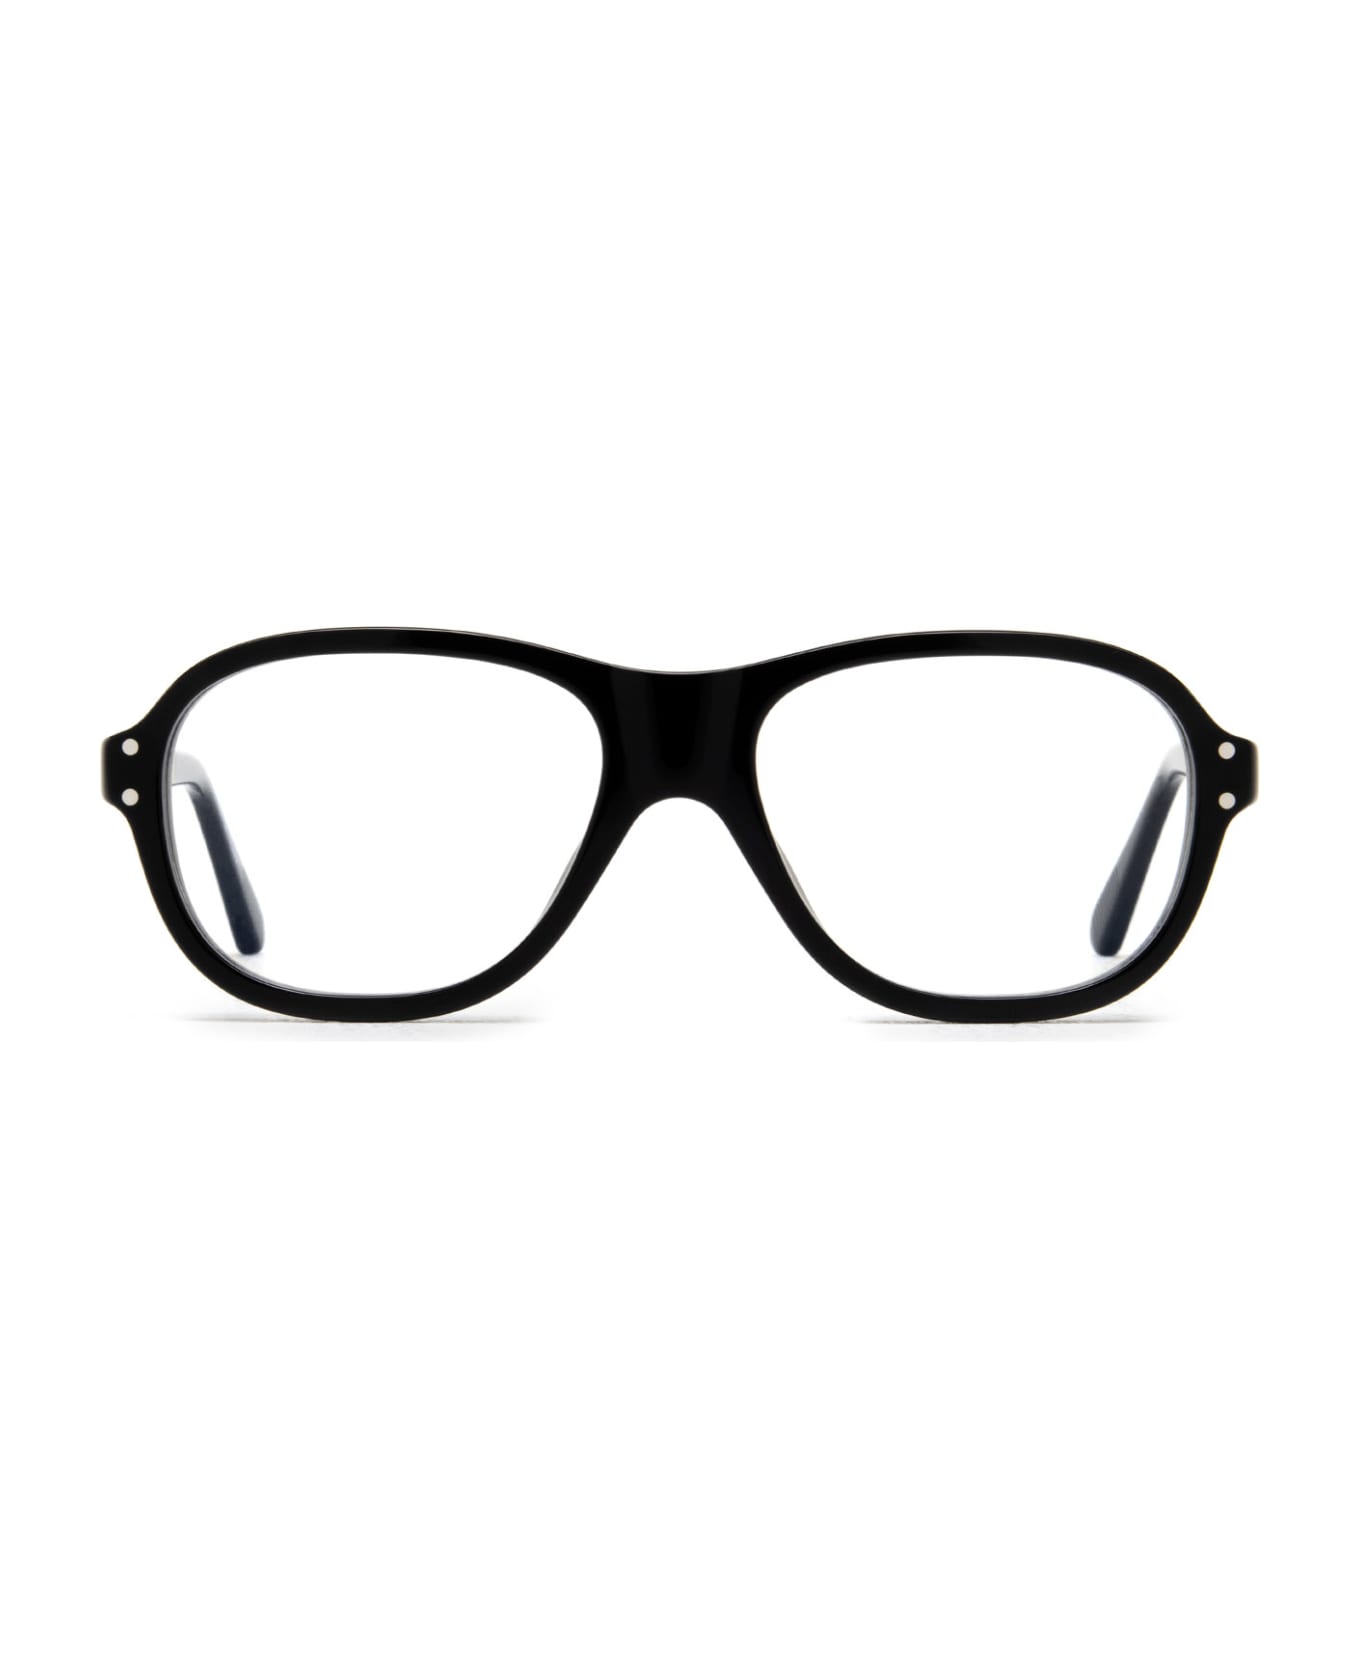 Cubitts Colonnade Black Glasses - Black